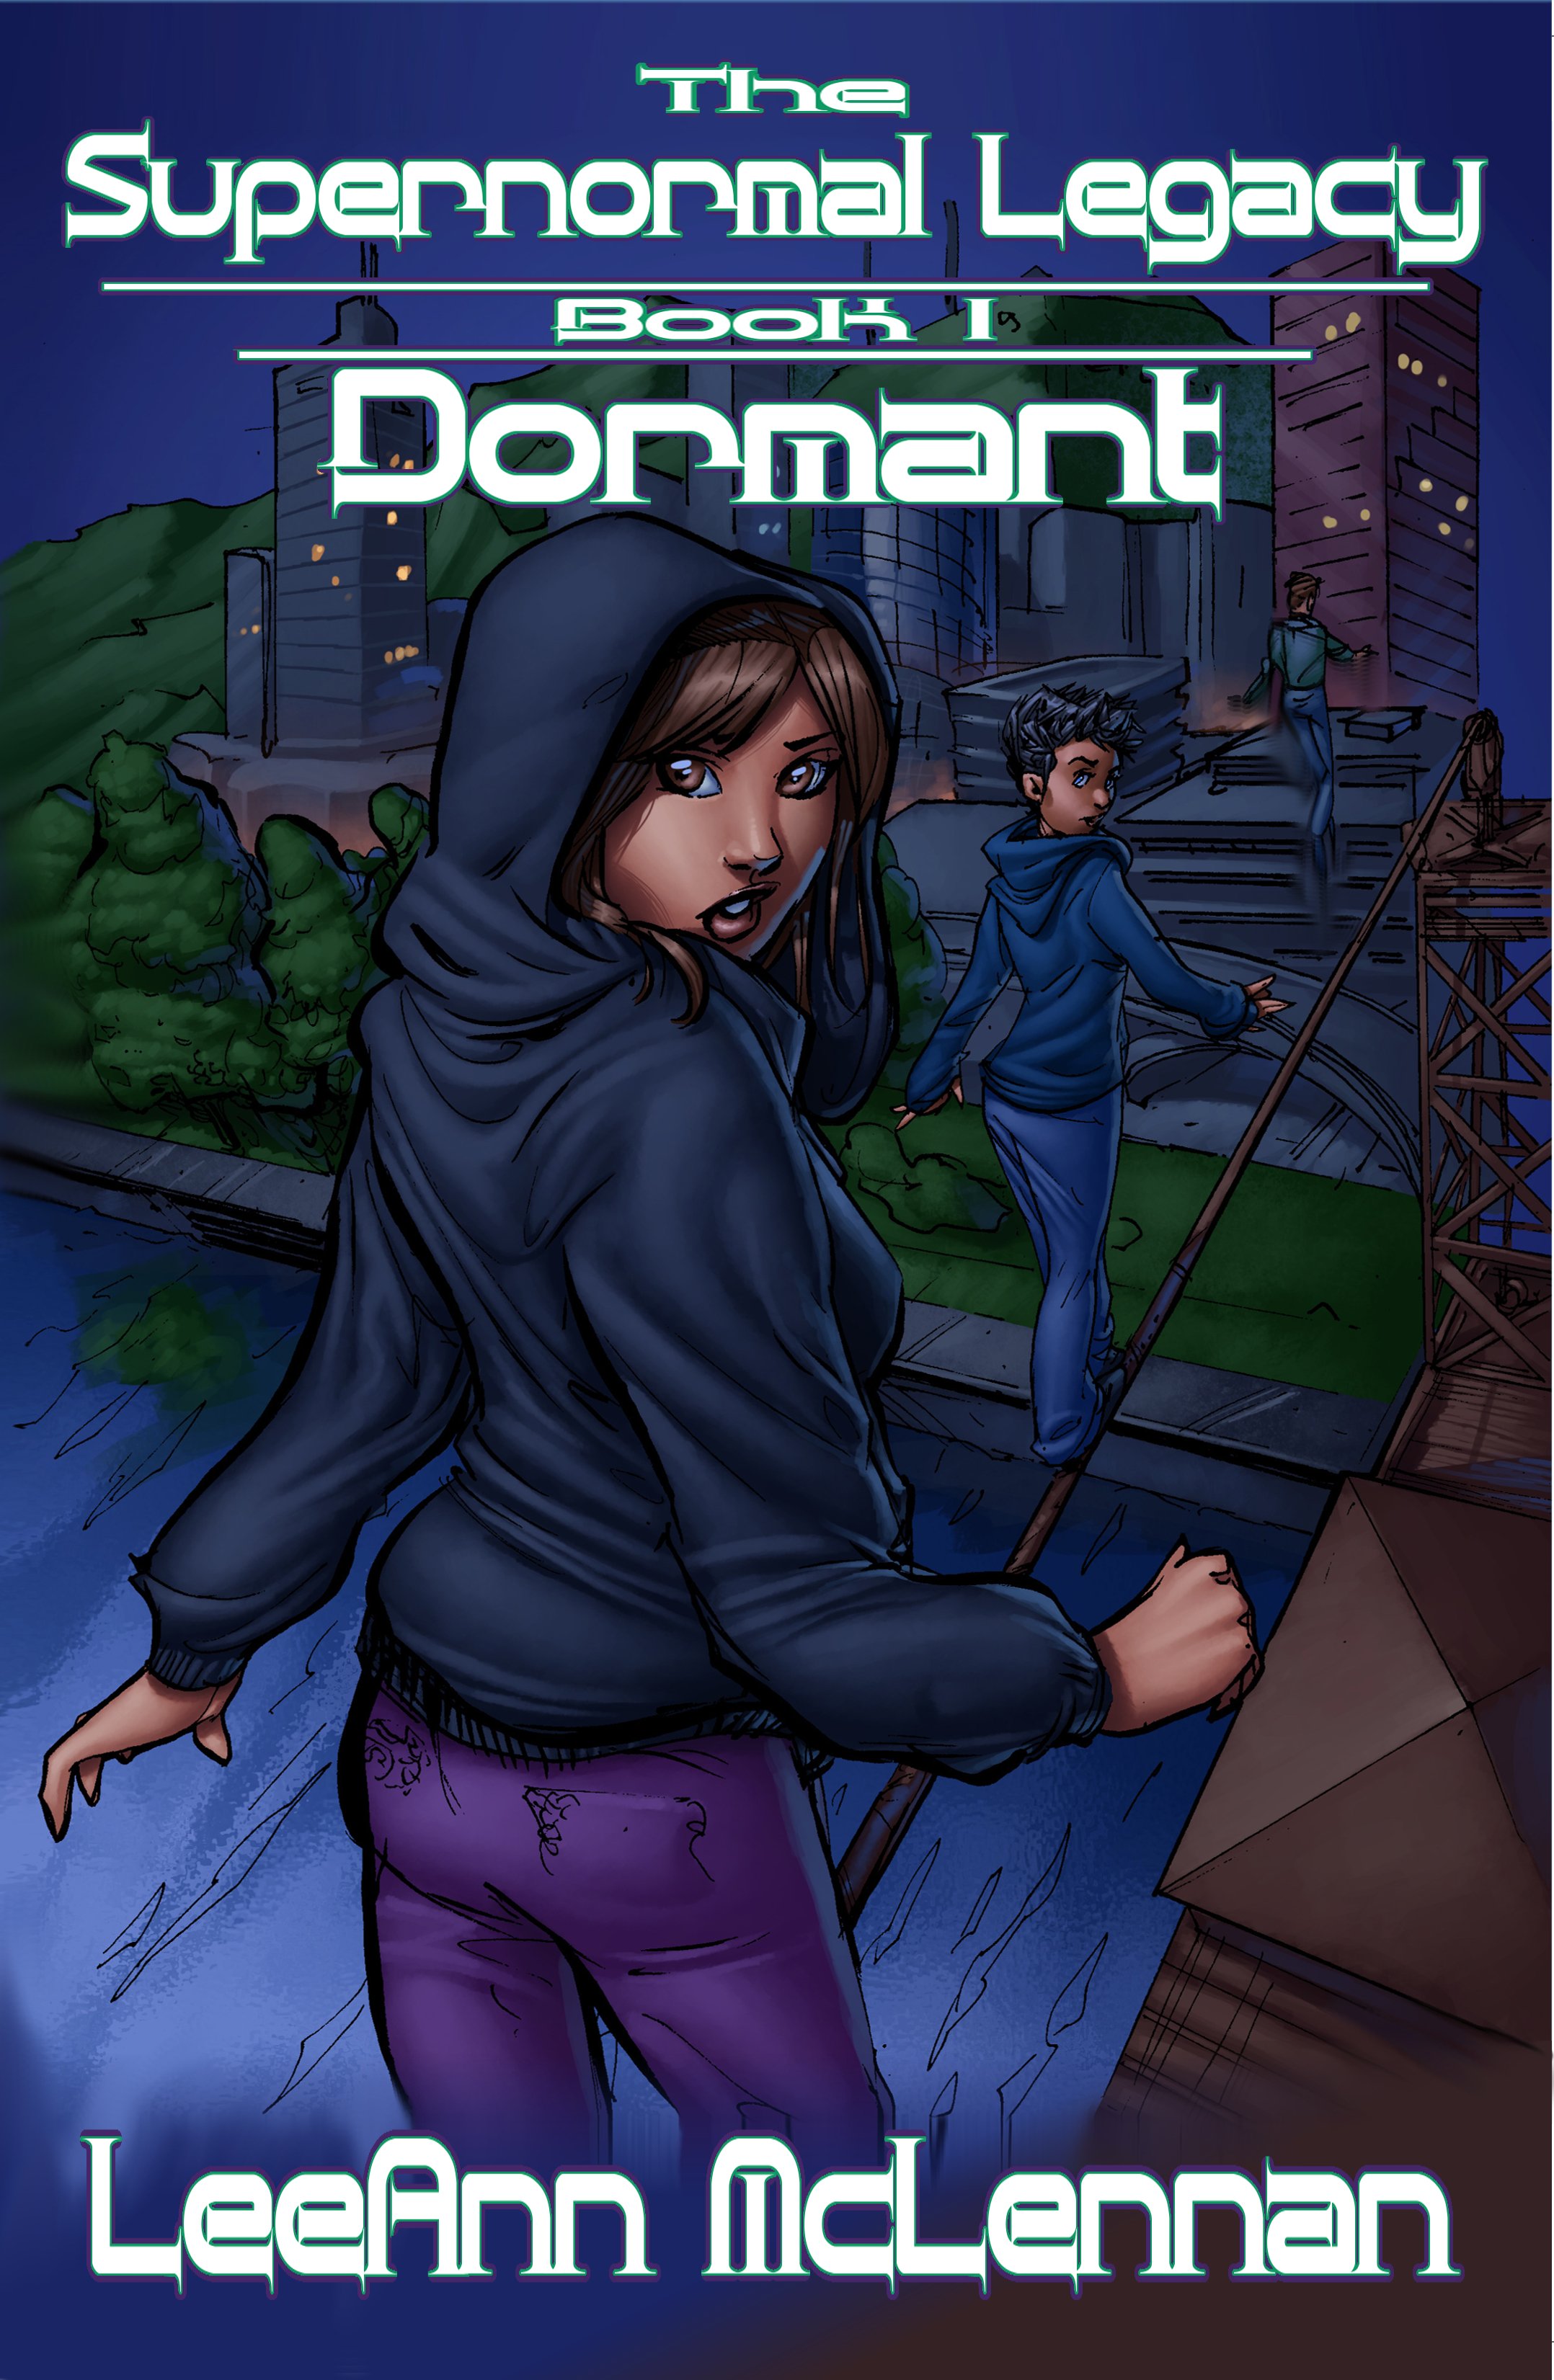 Supernormal Legacy Dormant eBook cover.jpg